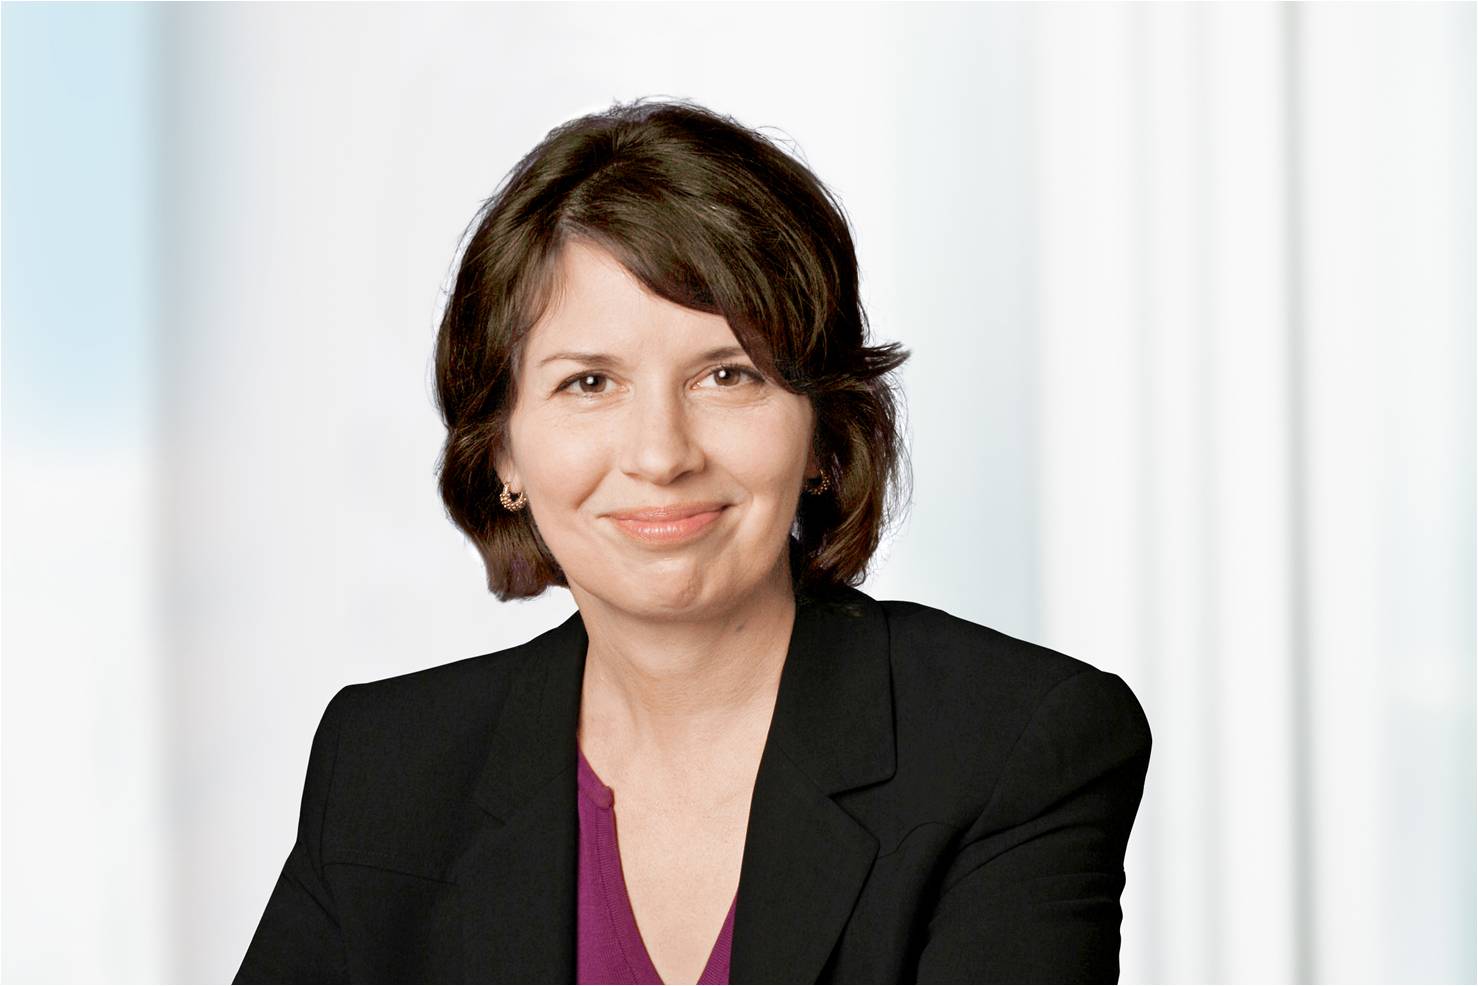 Claire Tondreau, Managing Director at SpiessConsult